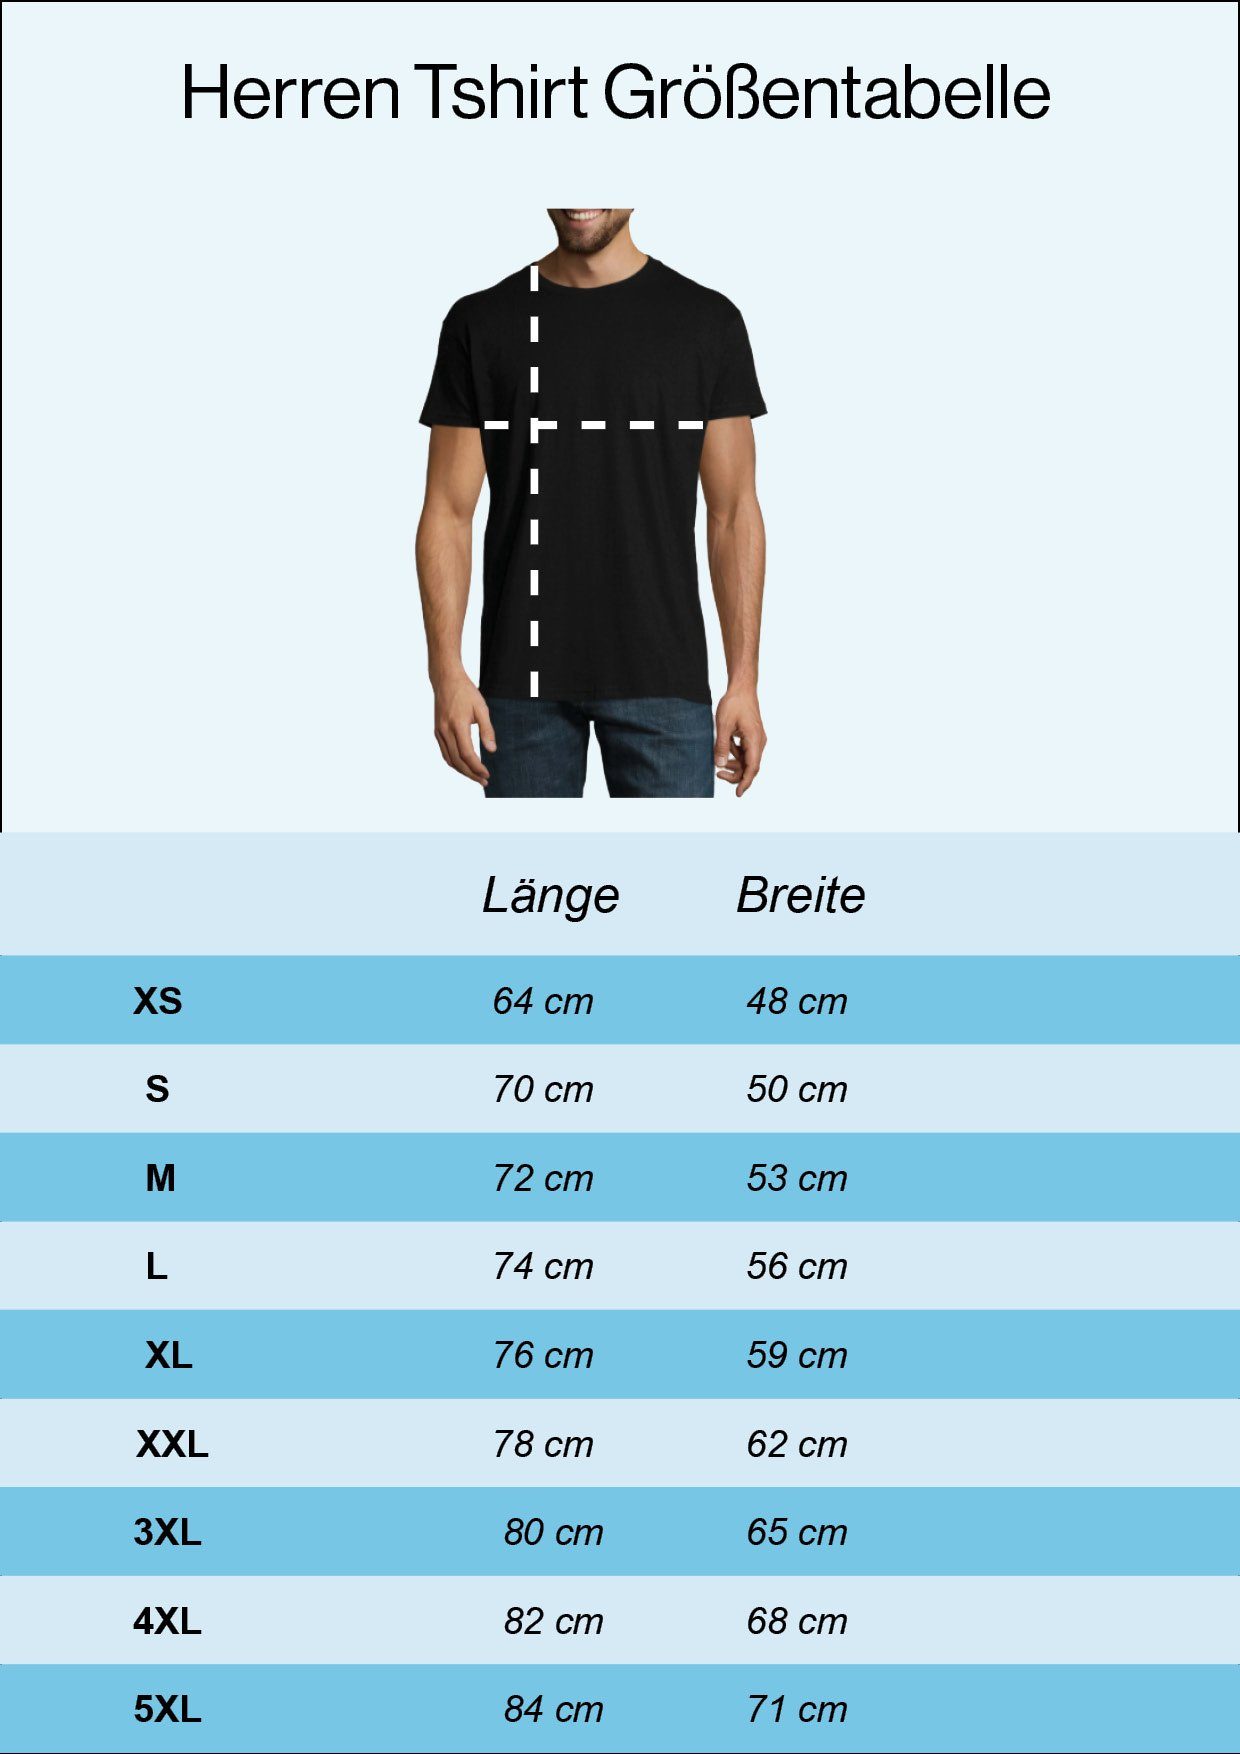 Frontdruck Designz Youth T-Shirt Melting Trendigem mit Herren Weiss Magic Cube Shirt